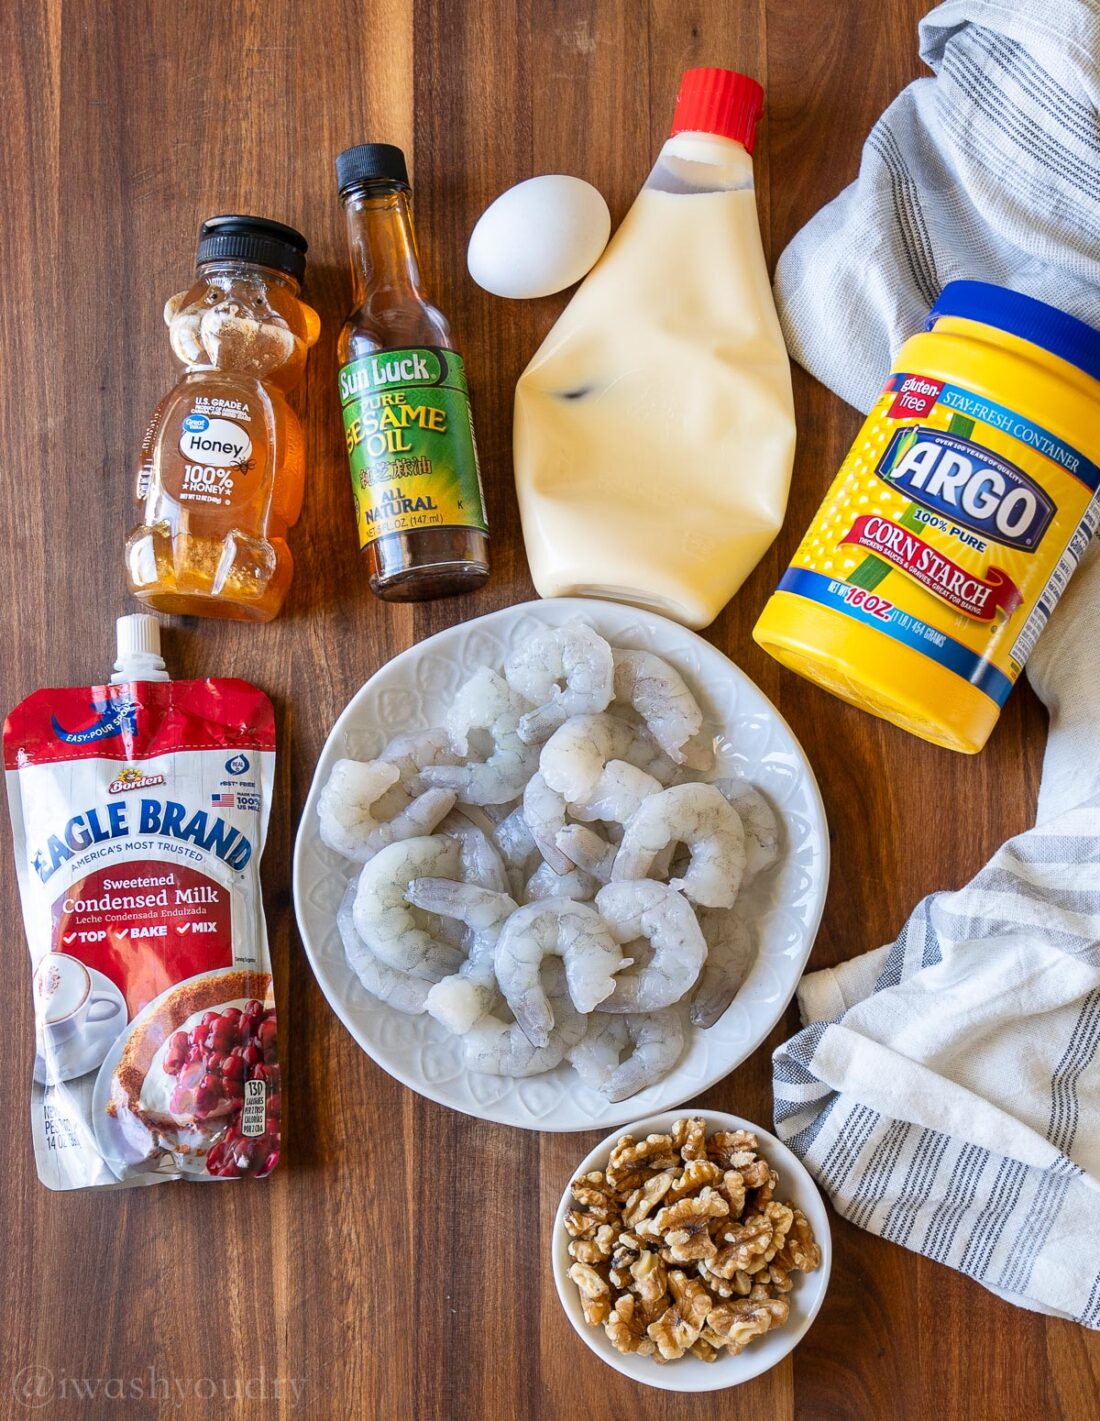 Ingredients for honey walnut shrimp on wooden surface.